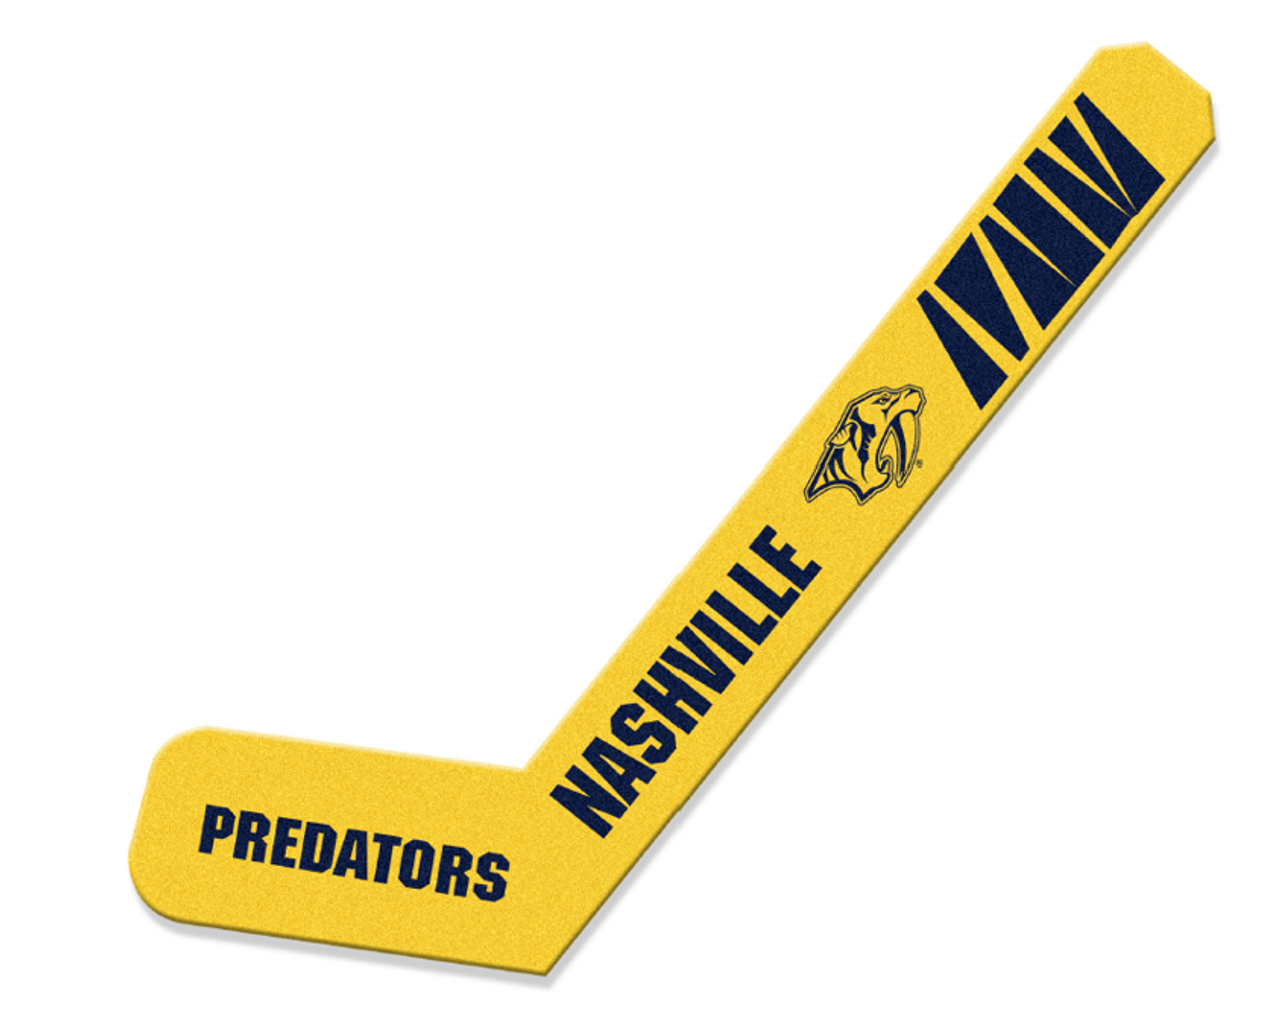 Nashville Predators - The room is set. 💜 #HockeyFightsCancer